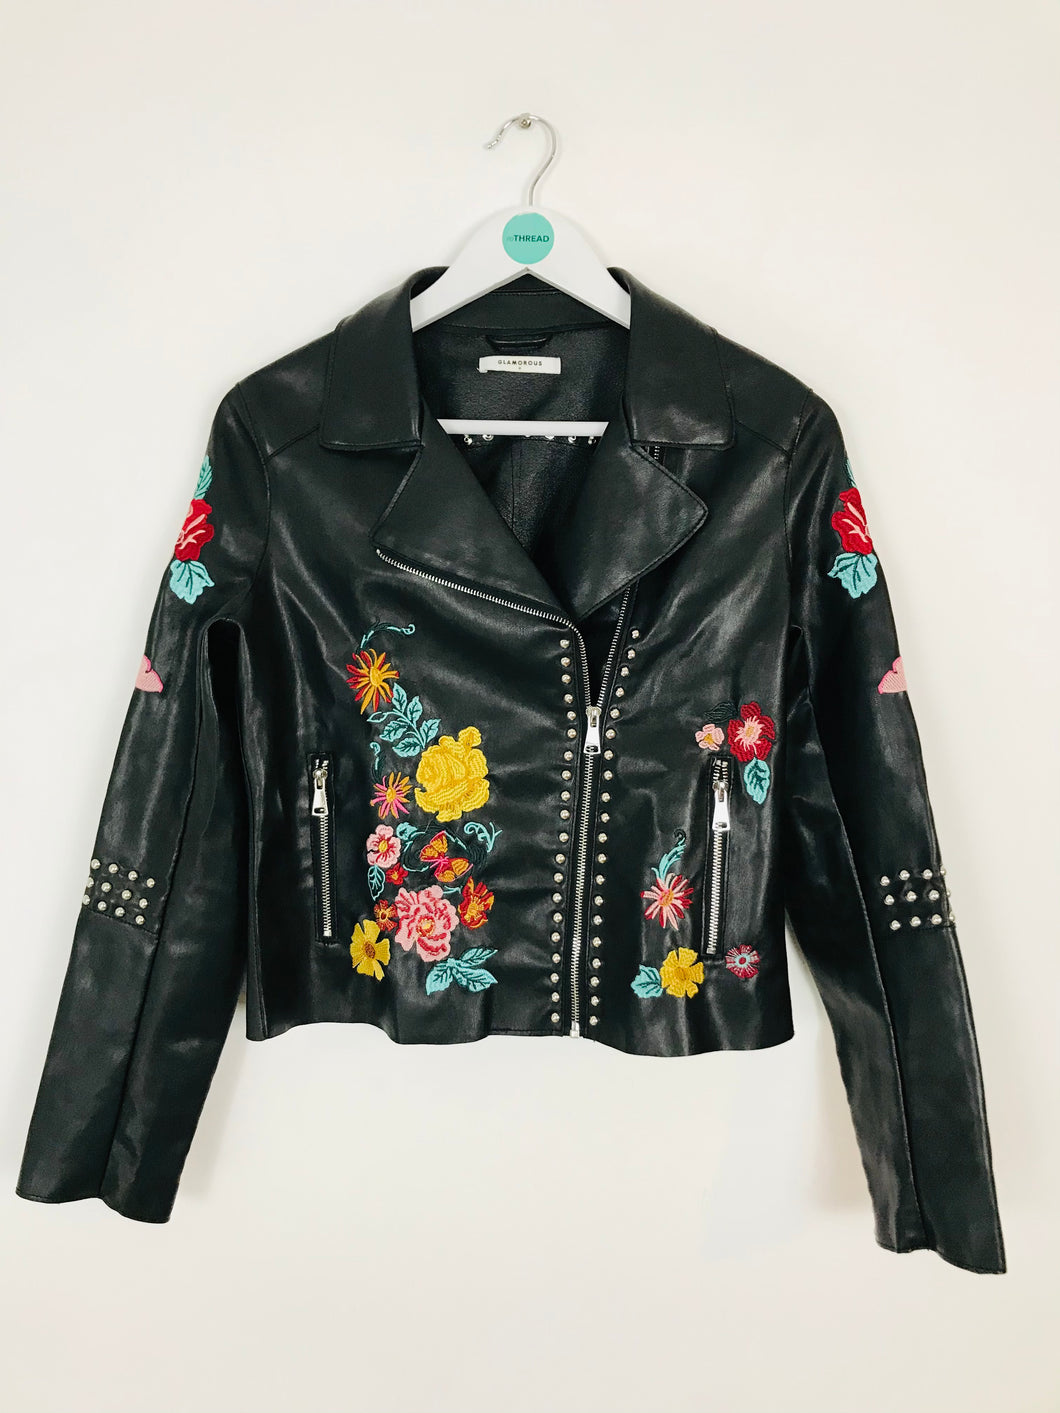 Glamorous Women’s Floral Faux Leather Embroidered Biker Jacket | M UK10-12 | Black